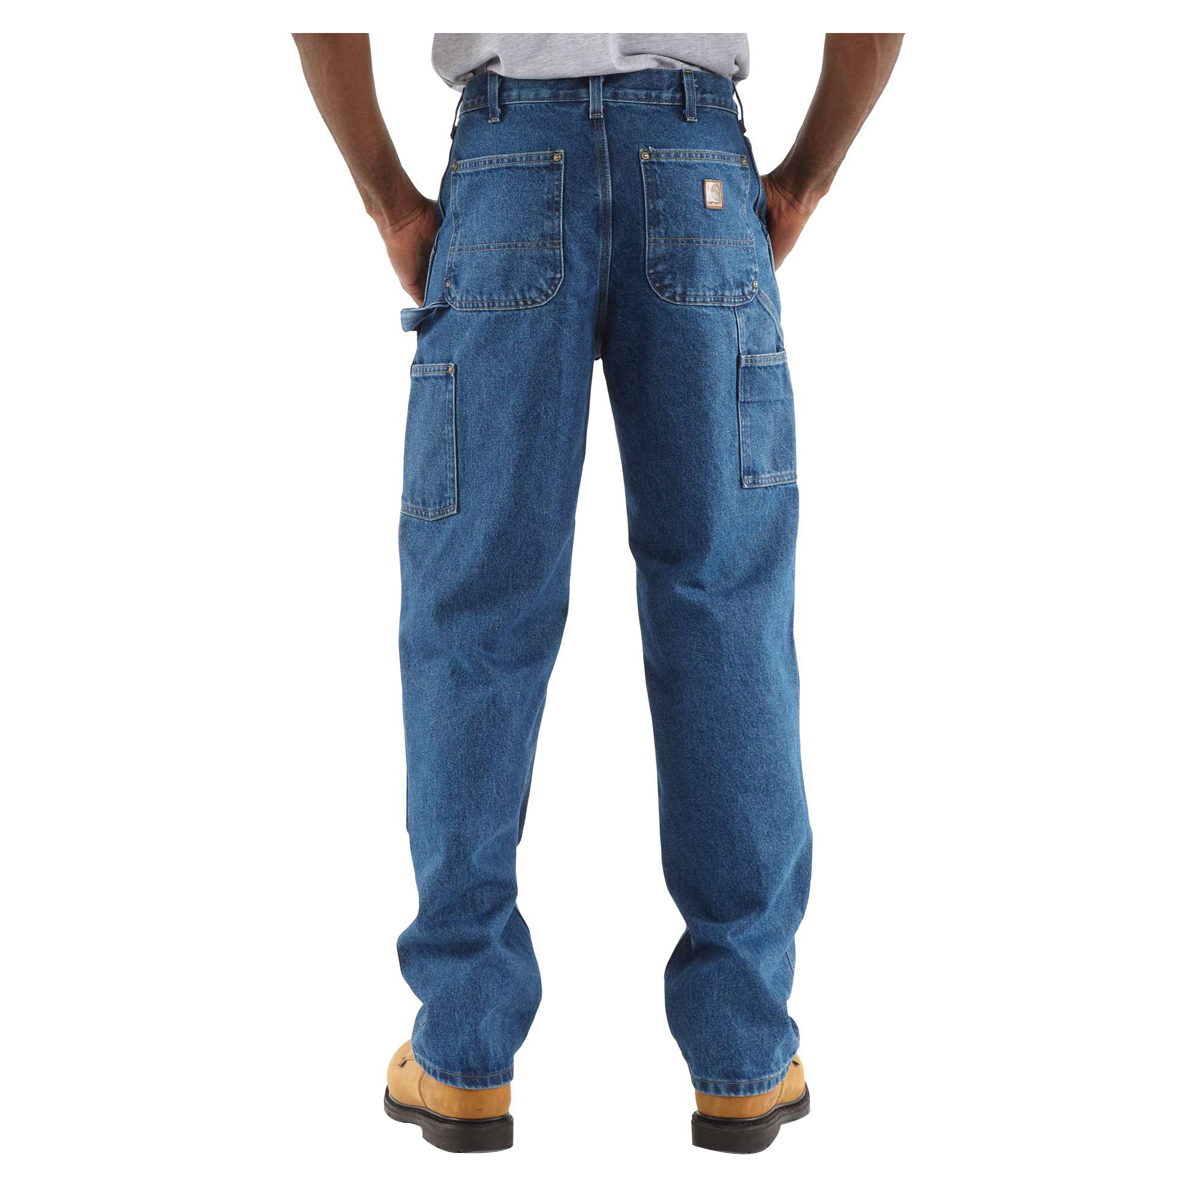 Carhartt B73-DST-40X32 Utility Logger Jeans, 40 in Waist, 32 in L Inseam, Darkstone, Loose Fit - 6